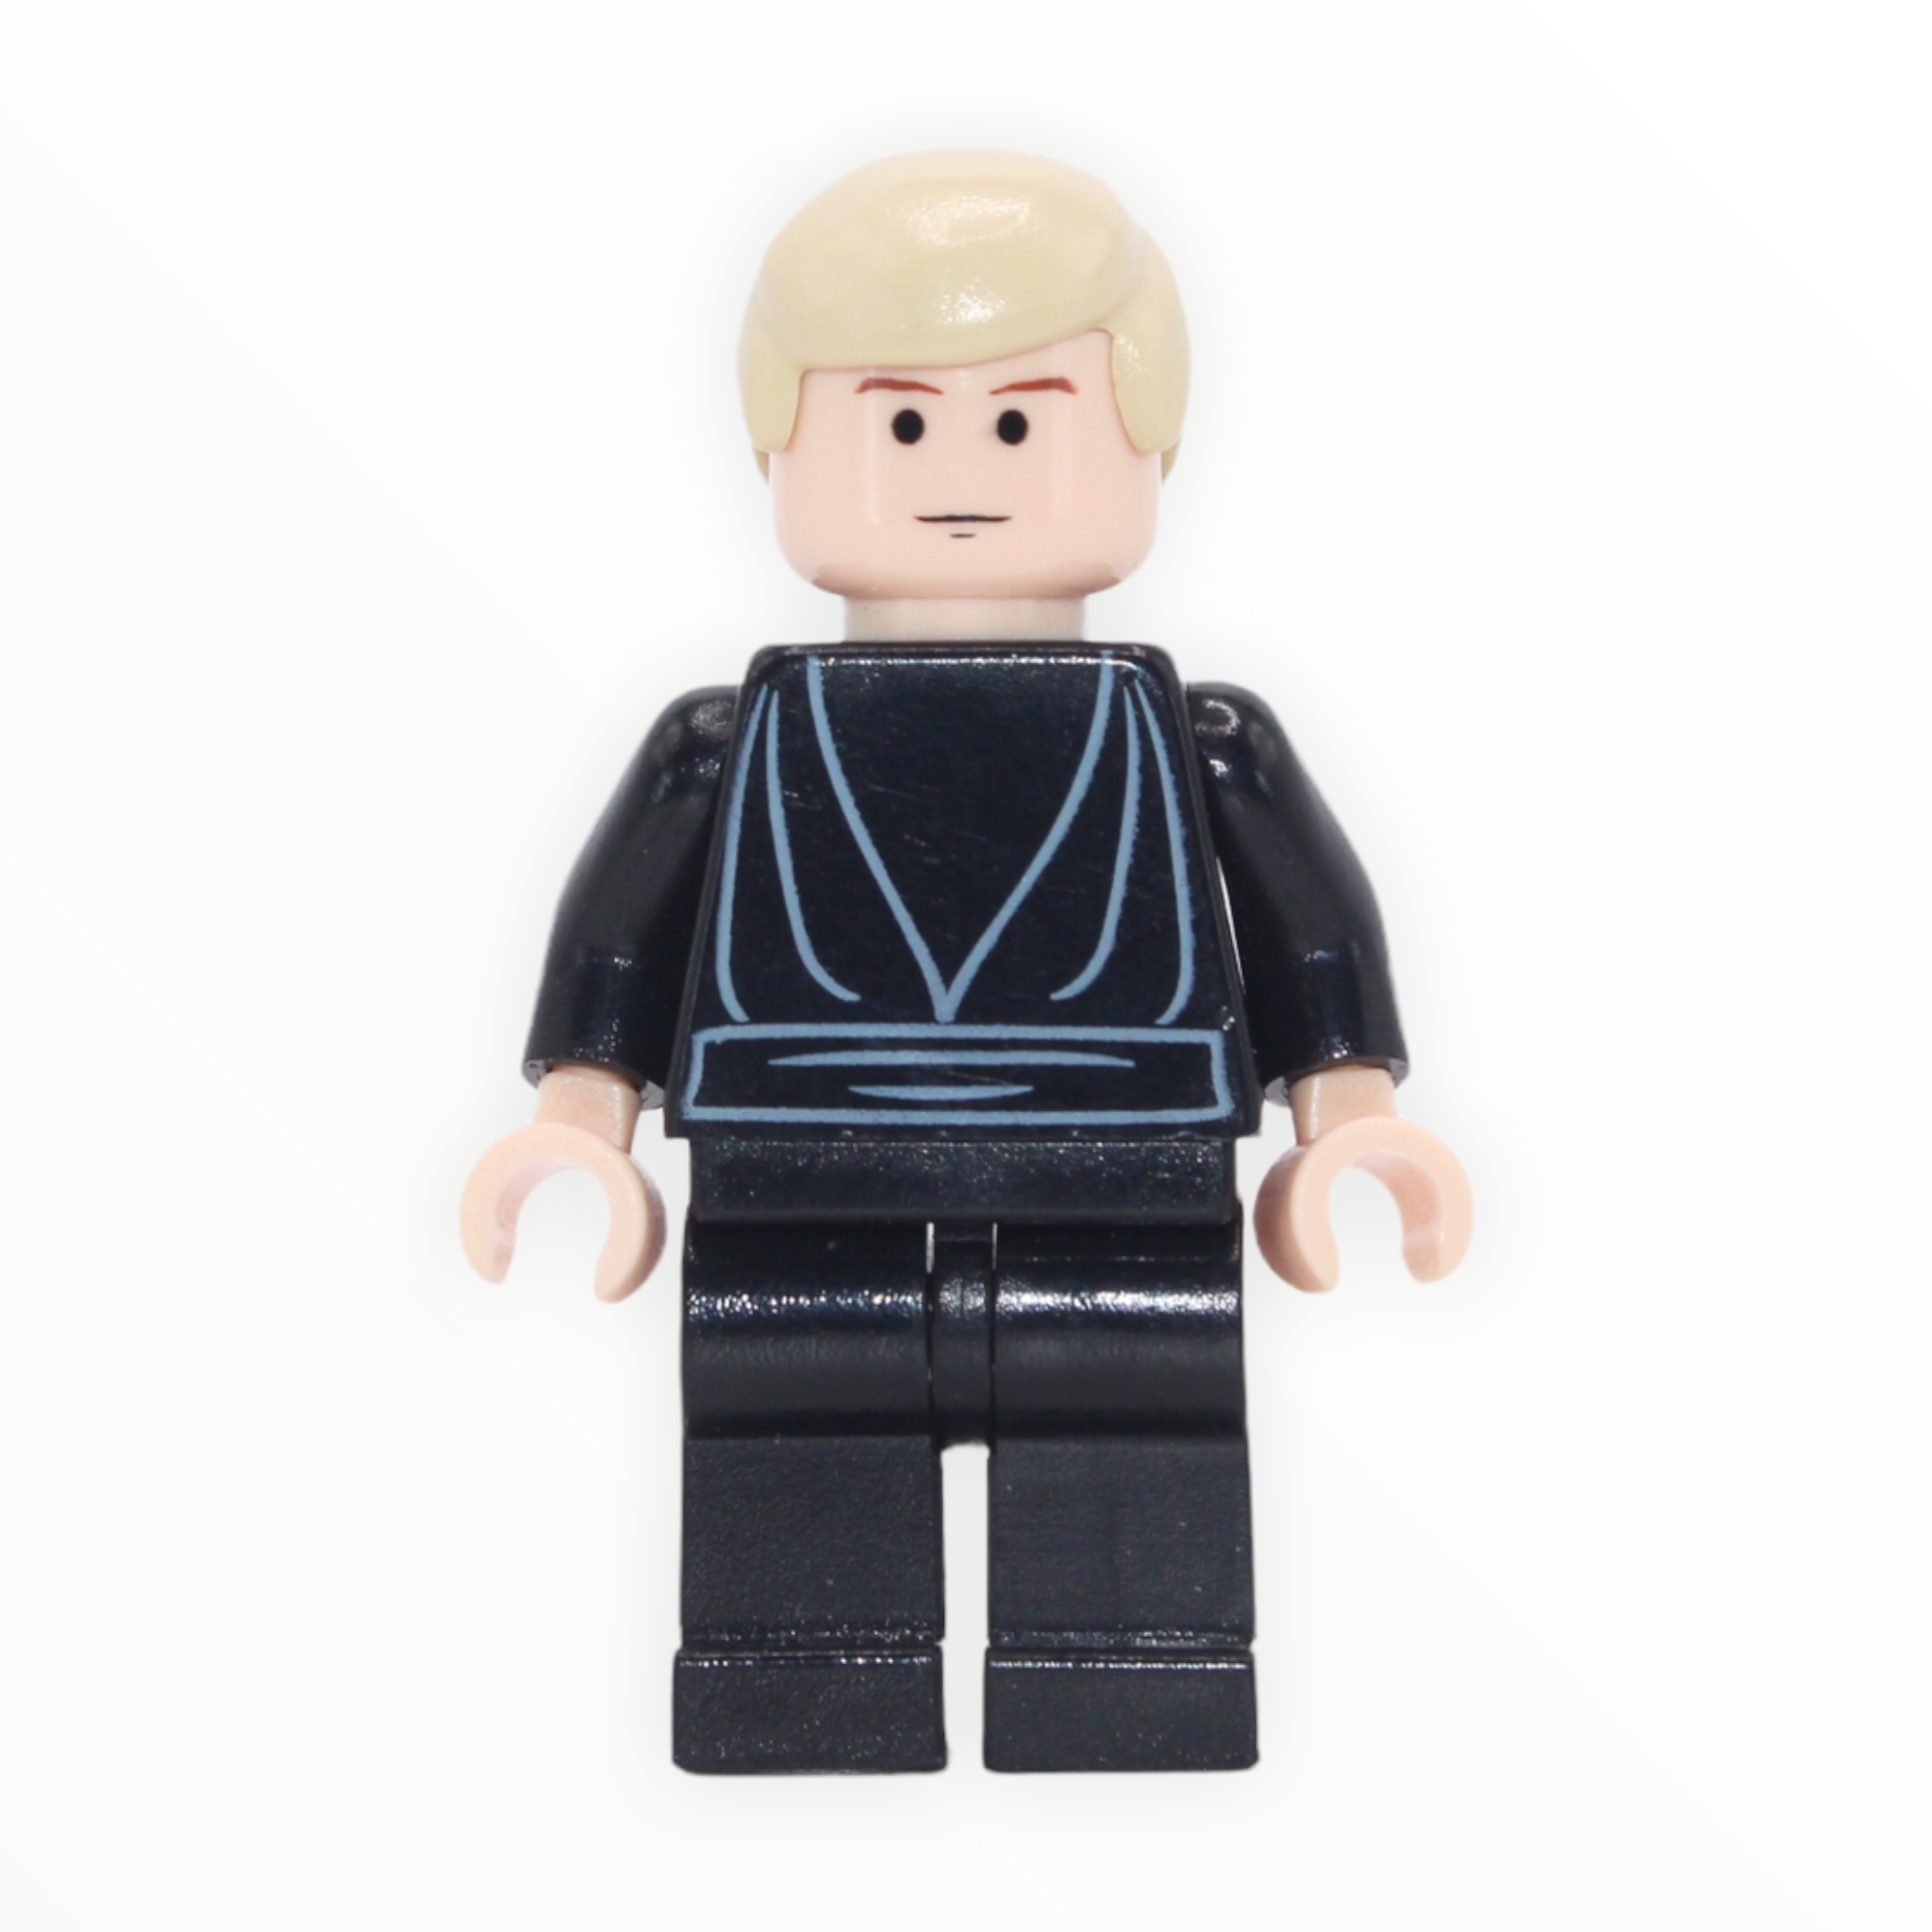 Luke Skywalker (black tunic, two light nougat hands, solid black eyes, 2006)